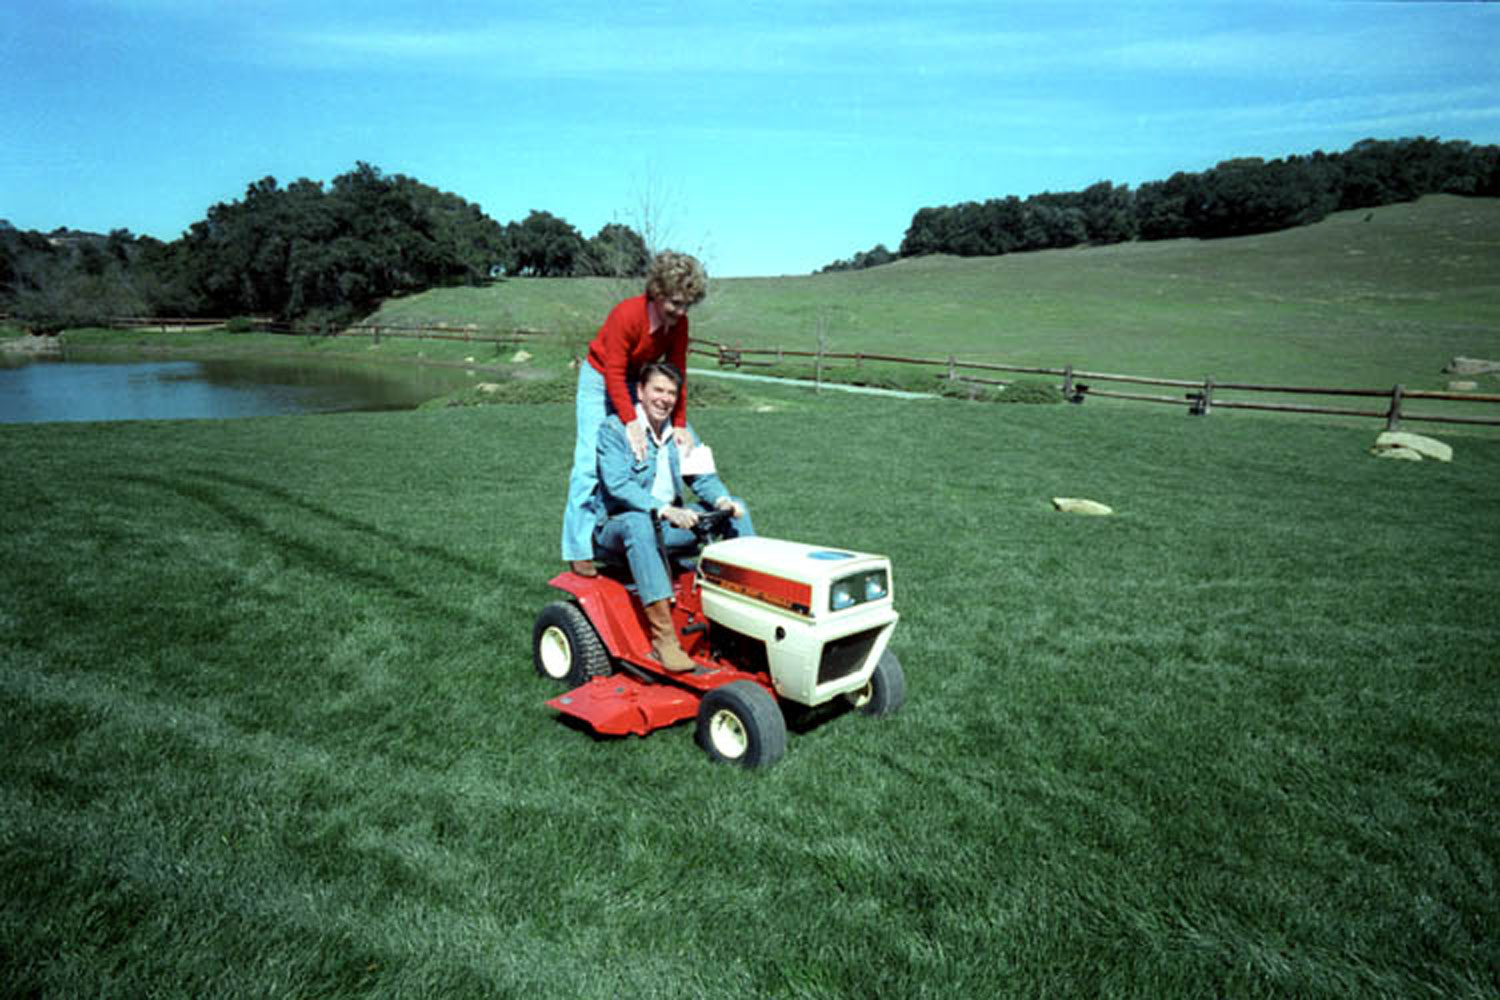 President Reagan and Nancy Reagan riding on their new lawn mower, an anniversary present, at Rancho Del Cielo. 3/4/82.